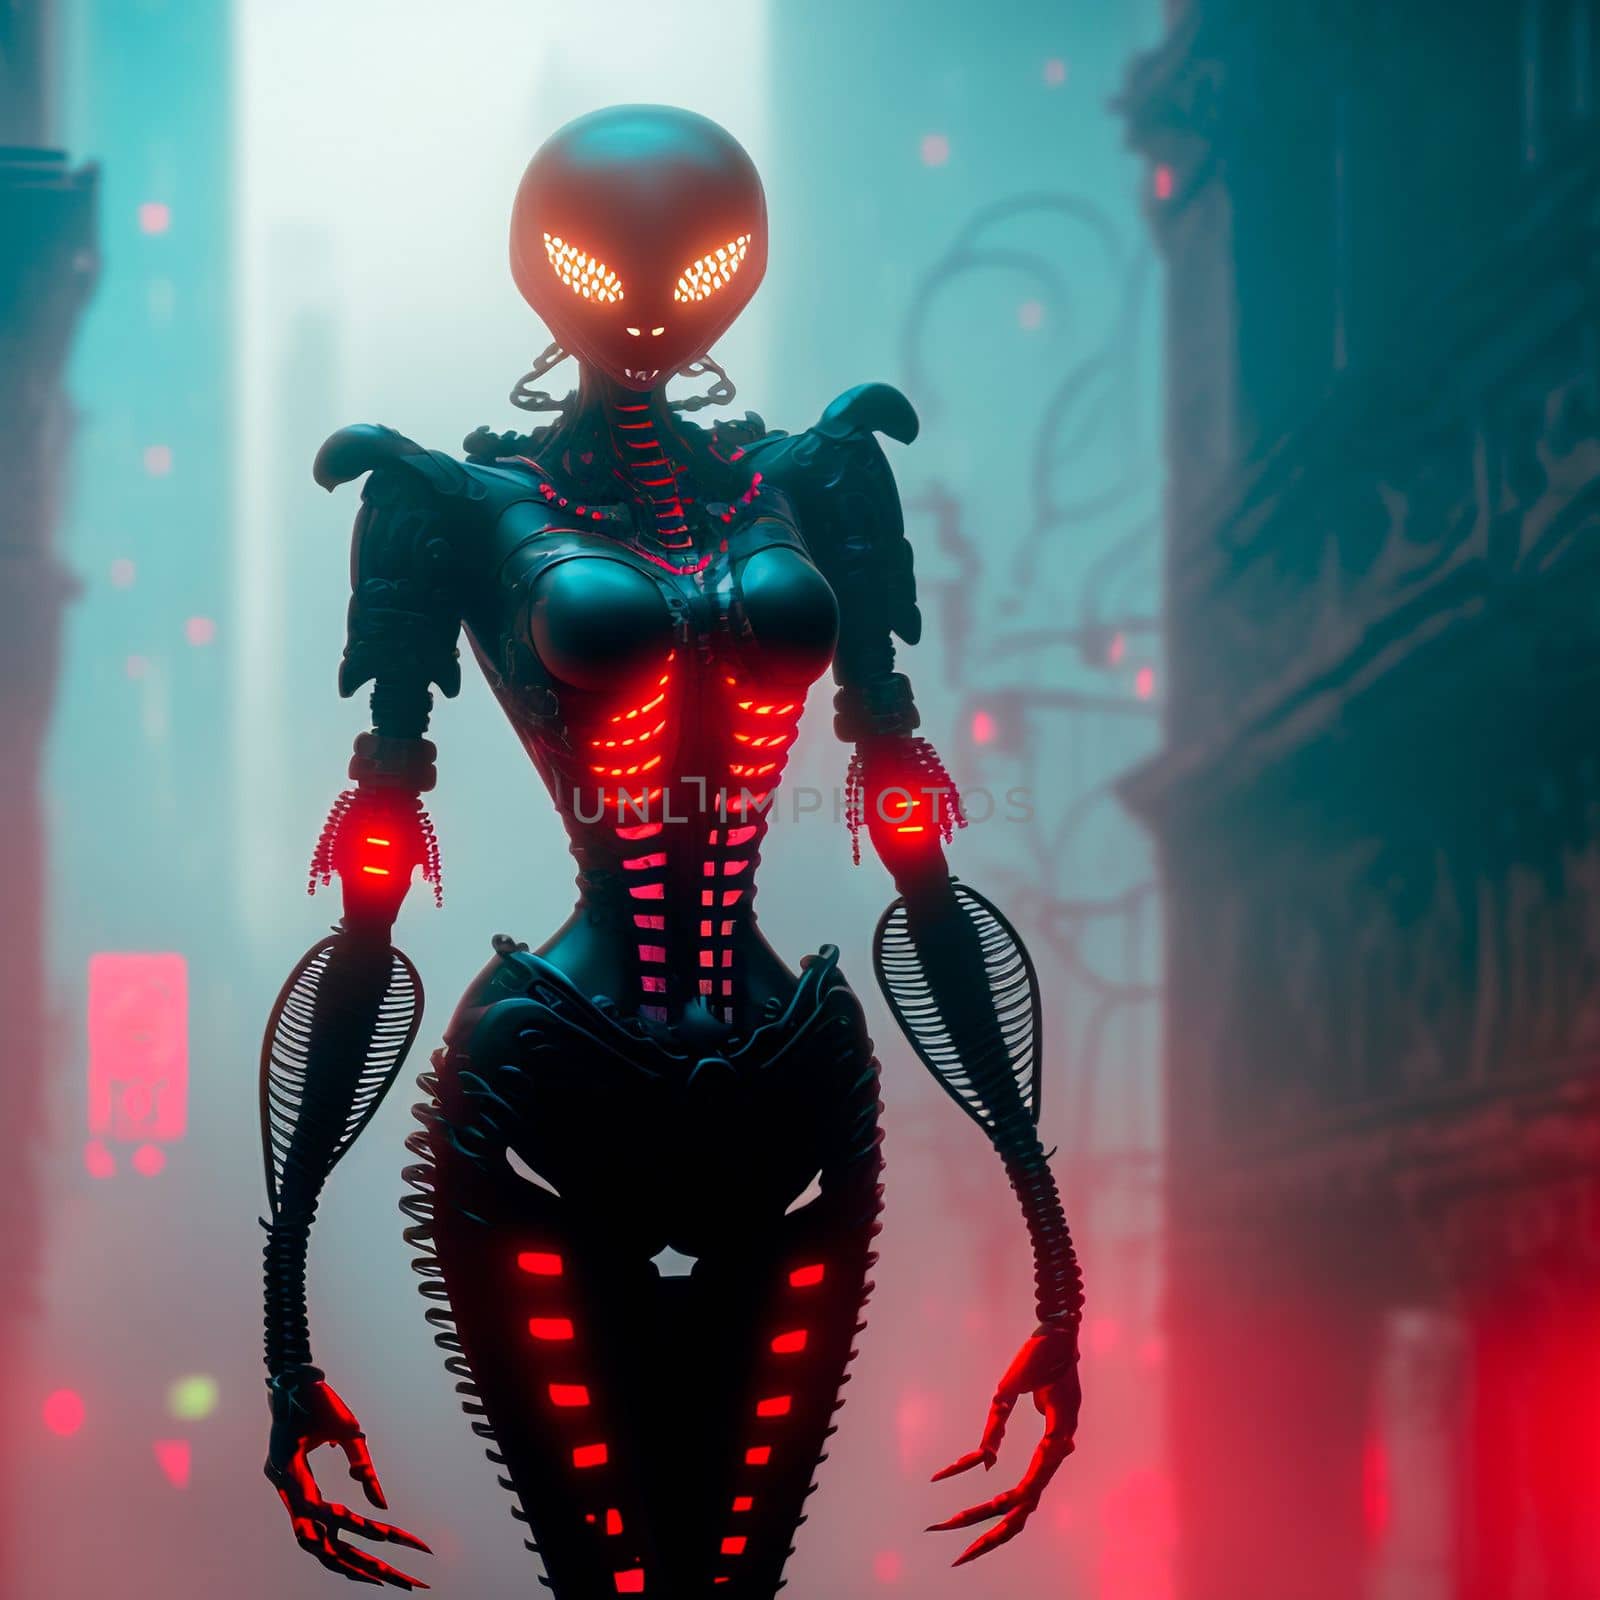 Monster cyborg in dystopian and cyberpunk styles by NeuroSky